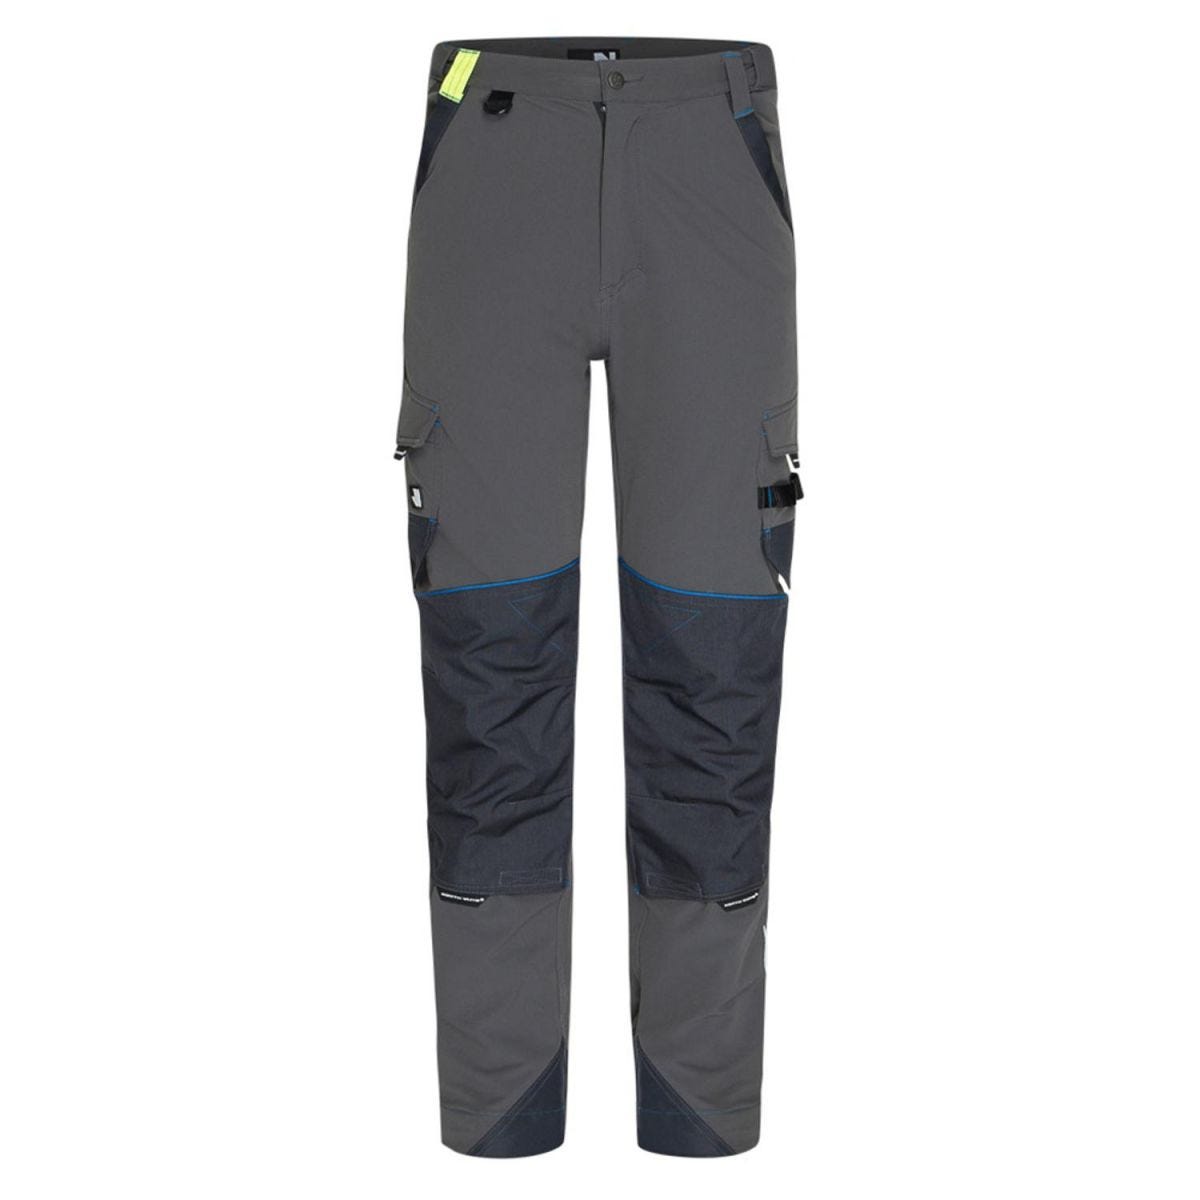 Pantalon de travail SACHA gris/bleu - North Ways - Taille 38 1